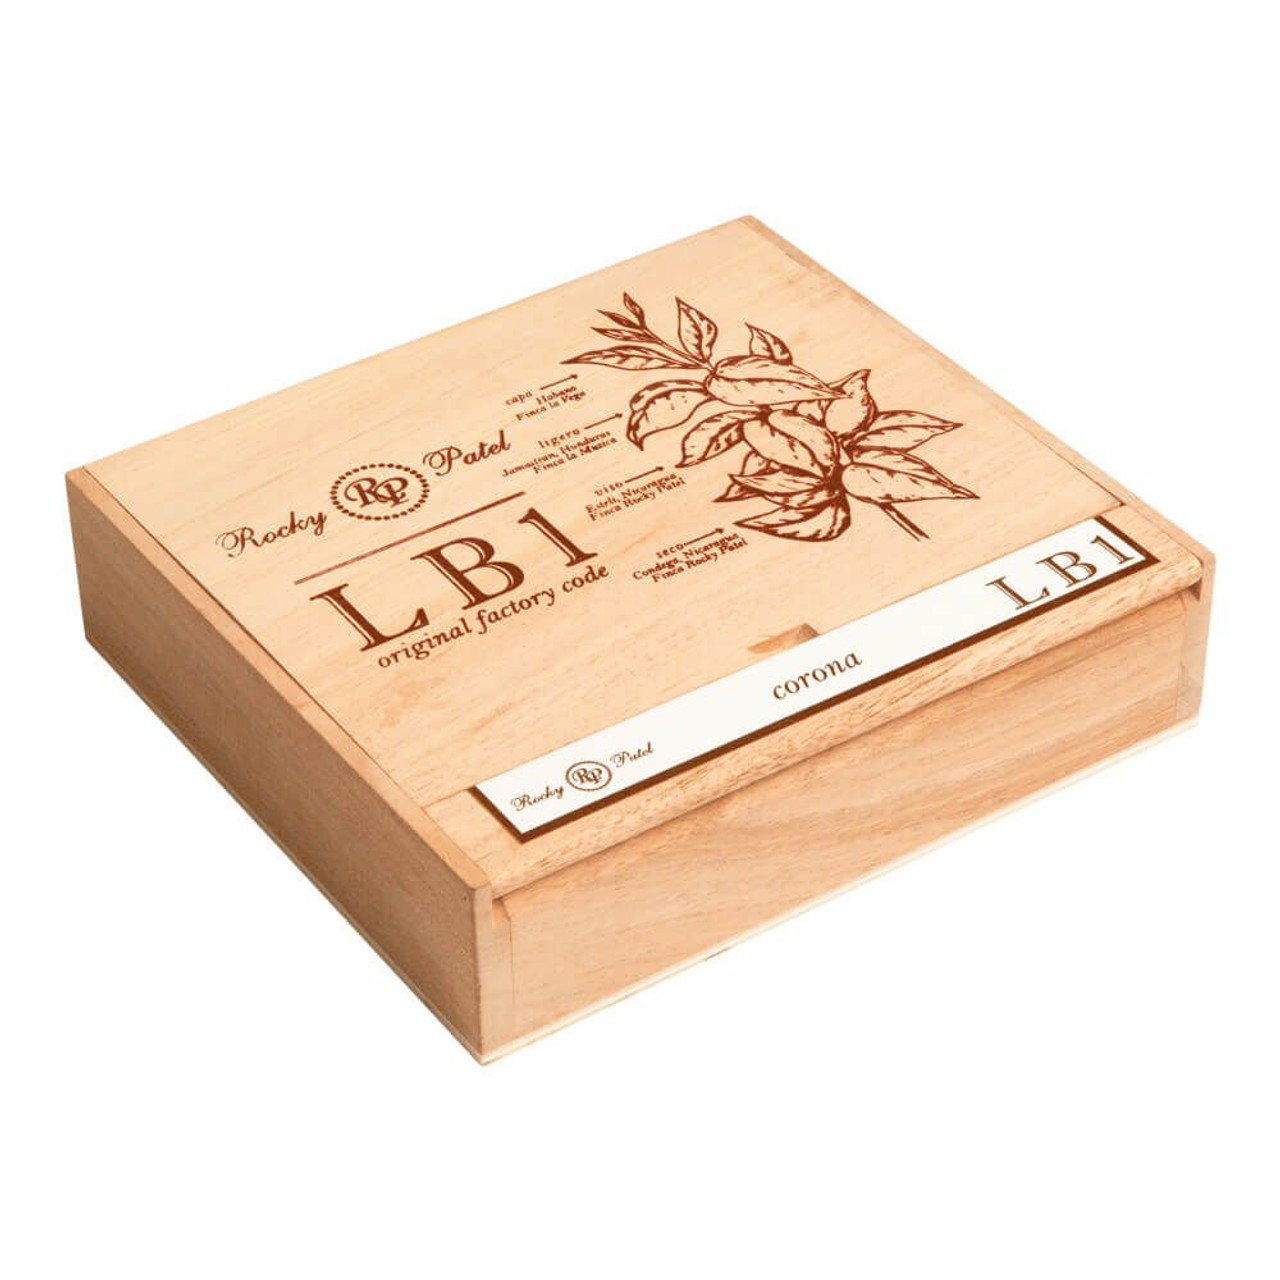 Rocky Patel LB1 Toro Cigars - 6.5 x 52 (Box of 20) *Box